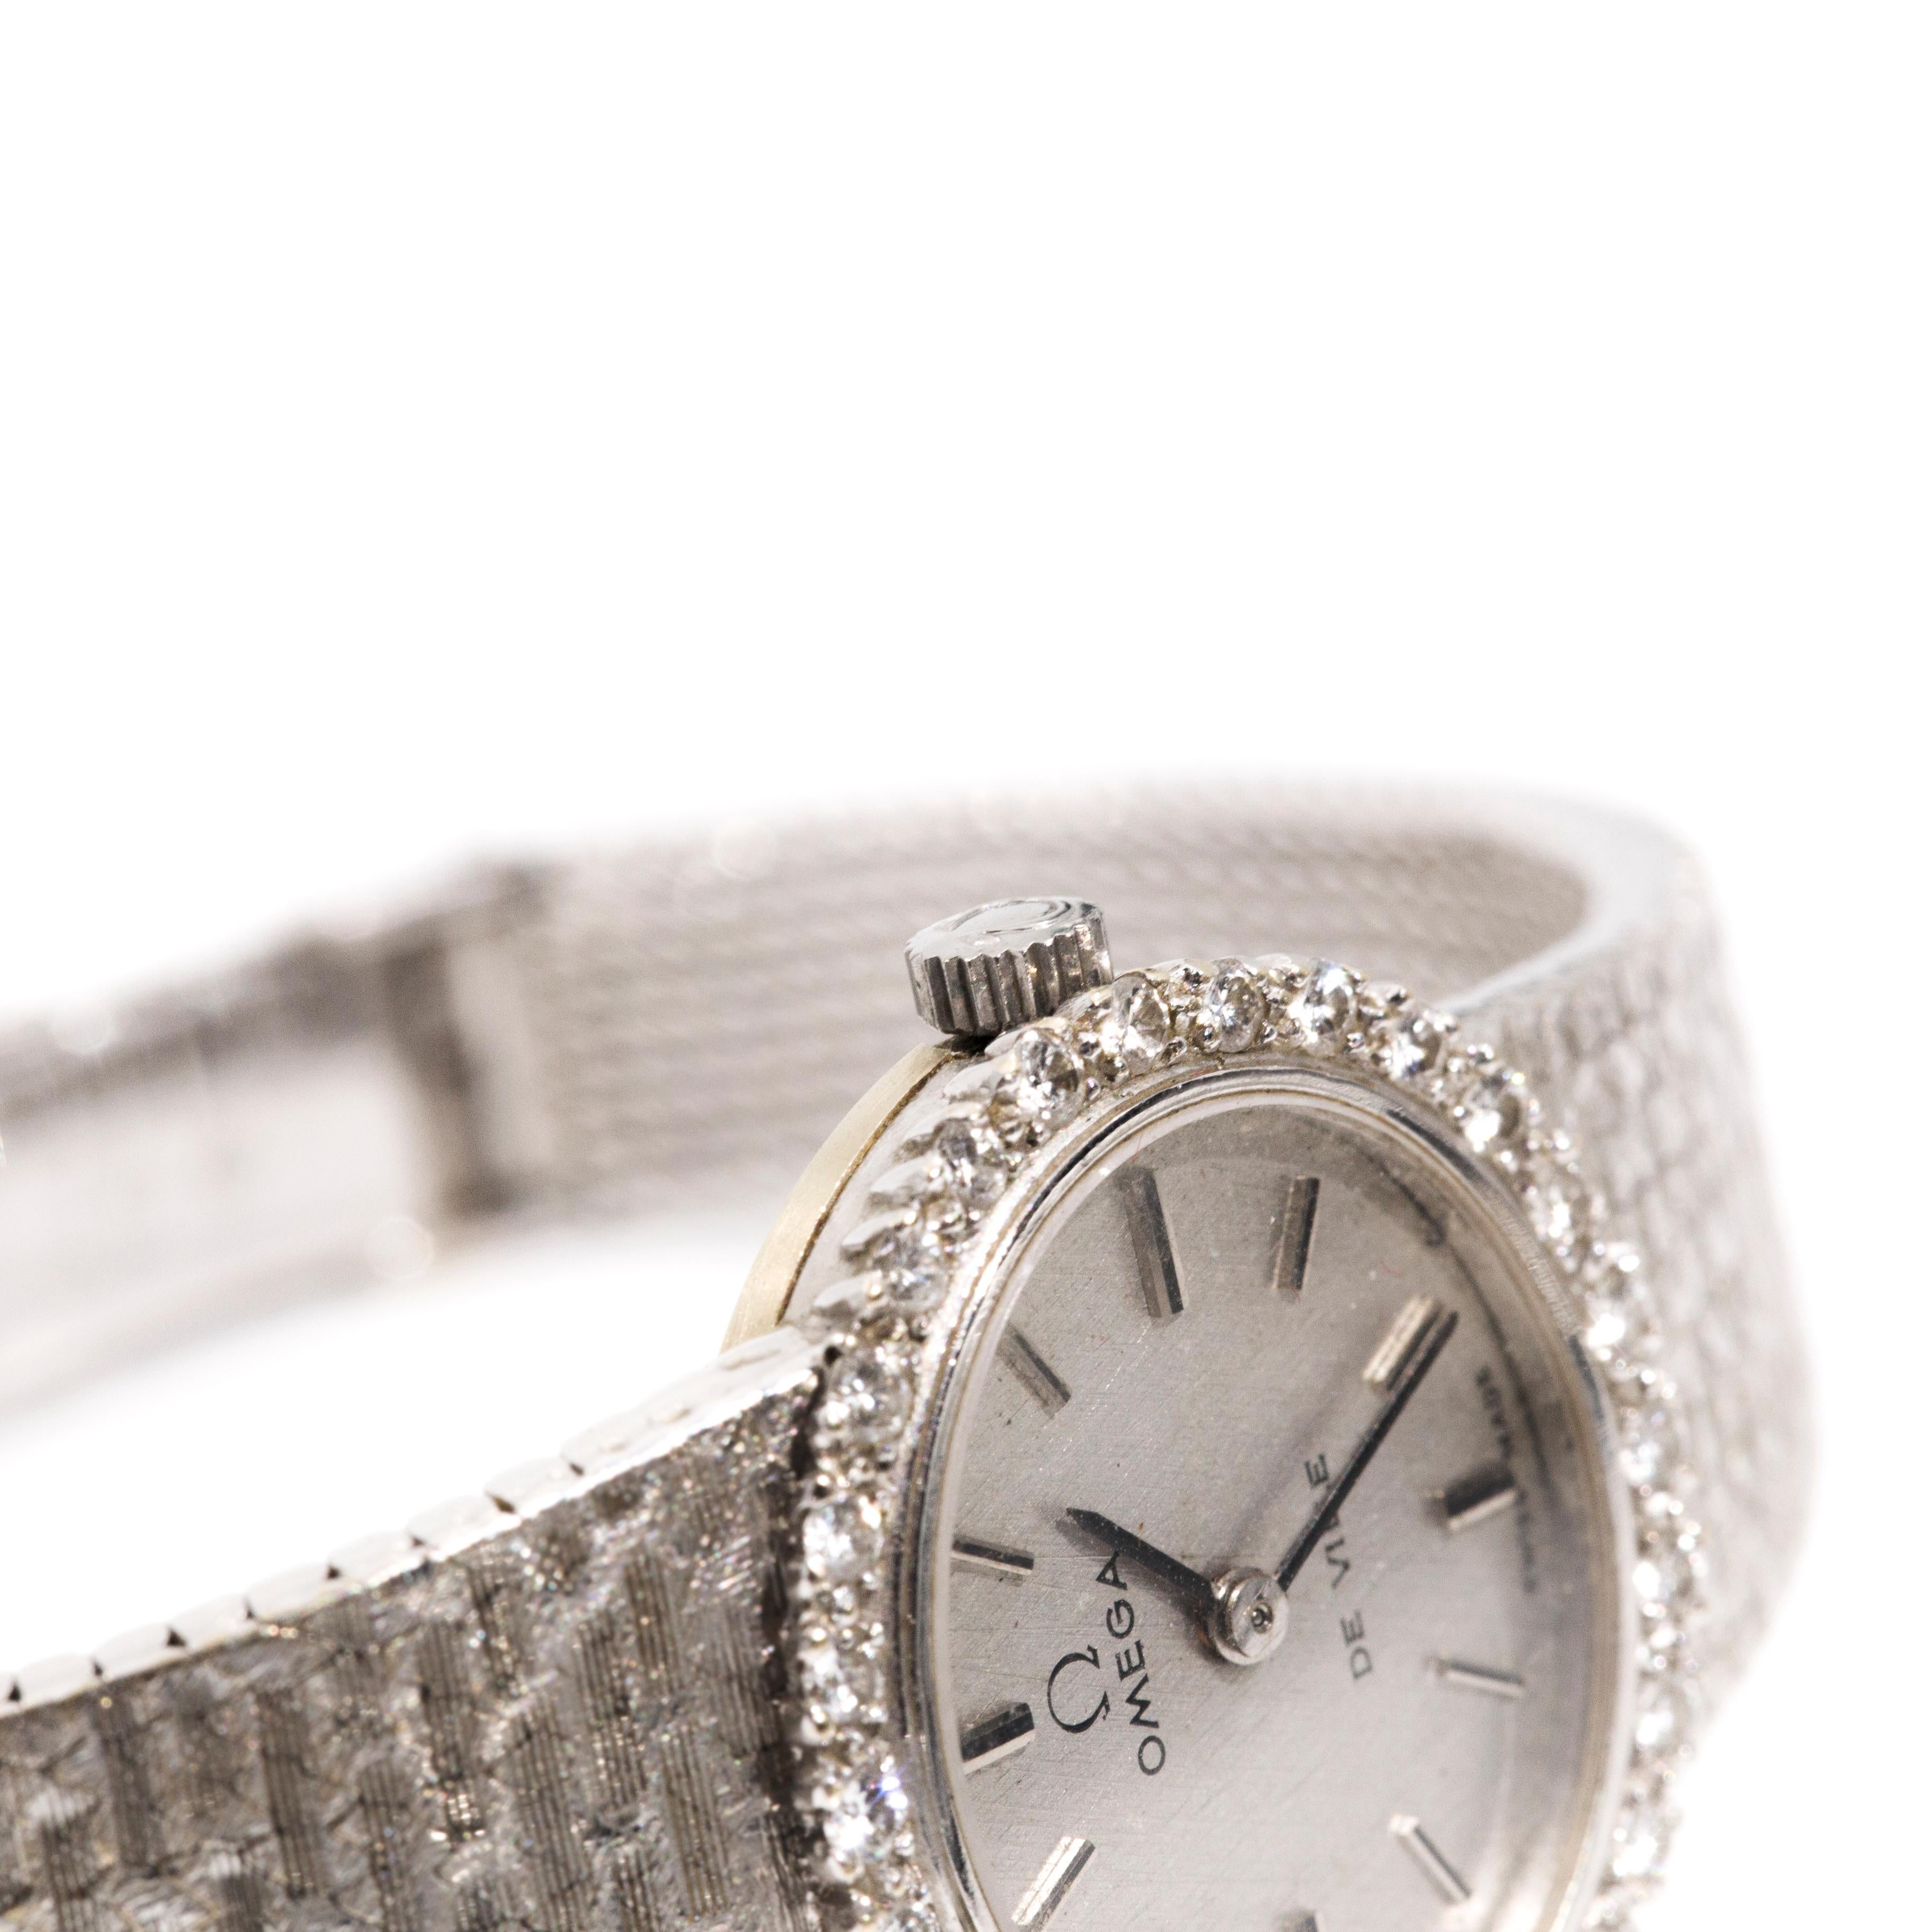  Omega De Ville 18 Carat White Gold and Diamond Vintage Ladies Automatic Watch 4